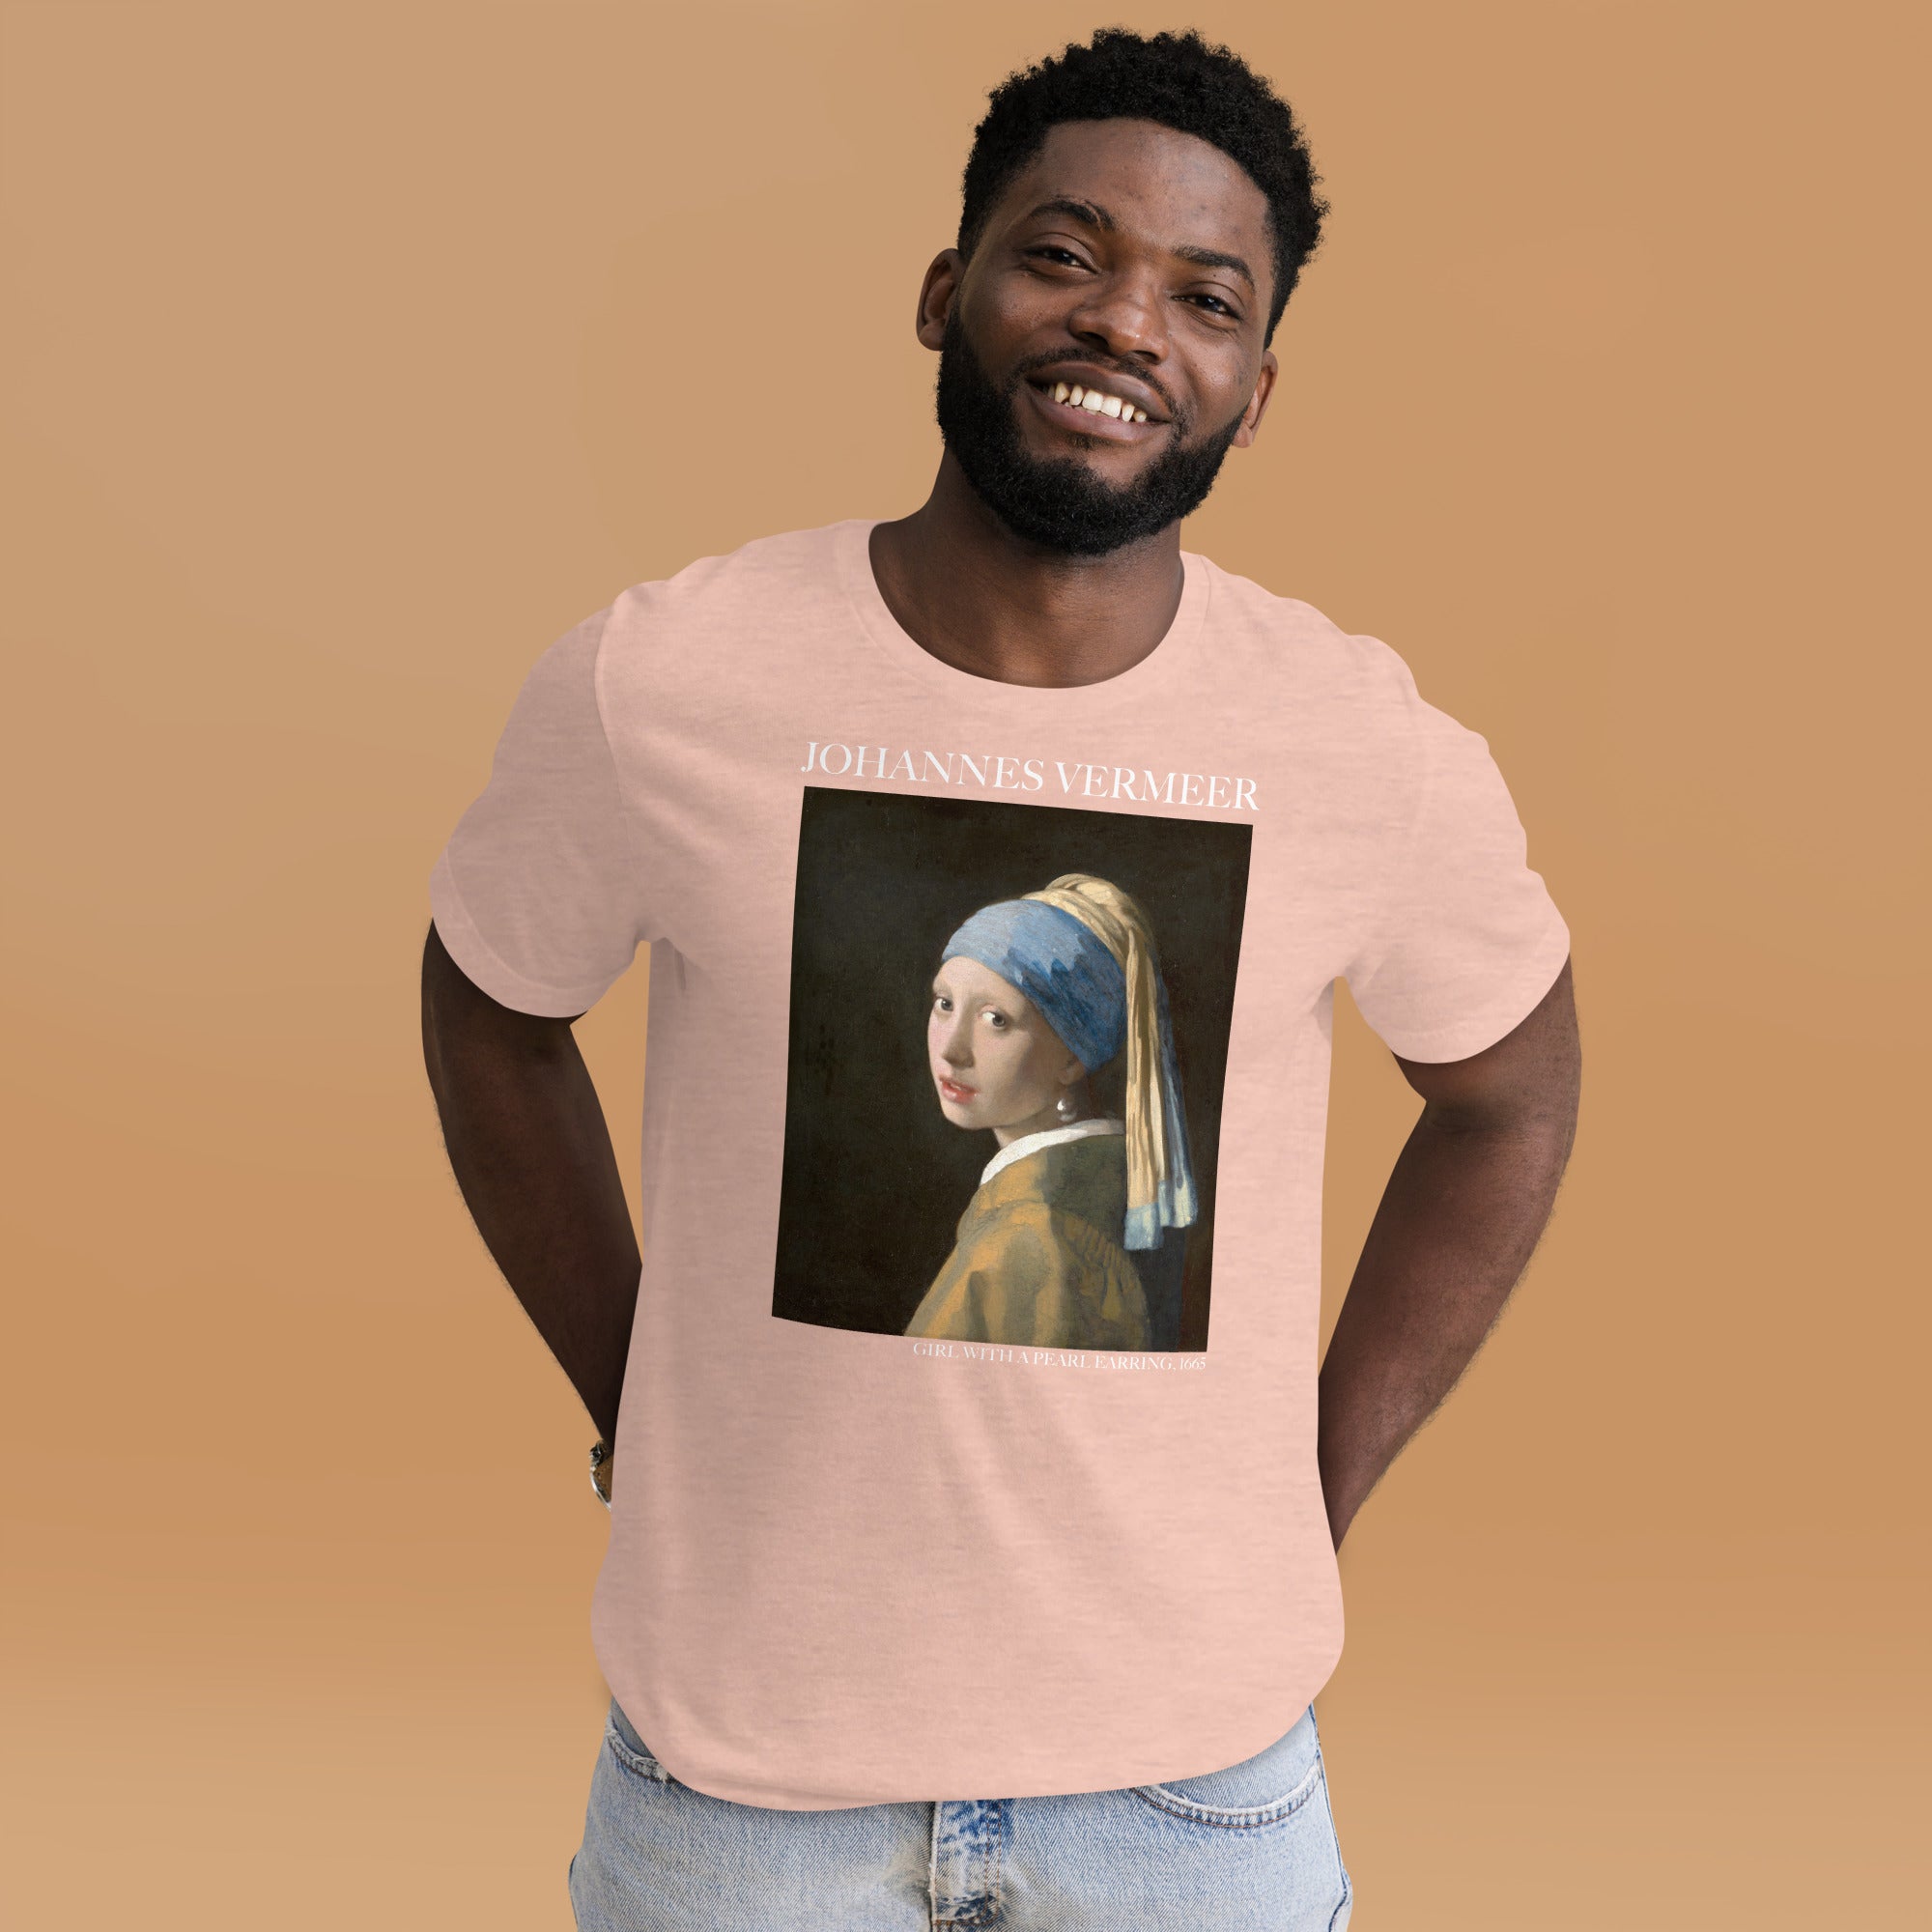 Johannes Vermeer 'Mädchen mit dem Perlenohrring' Berühmtes Gemälde T-Shirt | Unisex Klassisches Kunst-T-Shirt